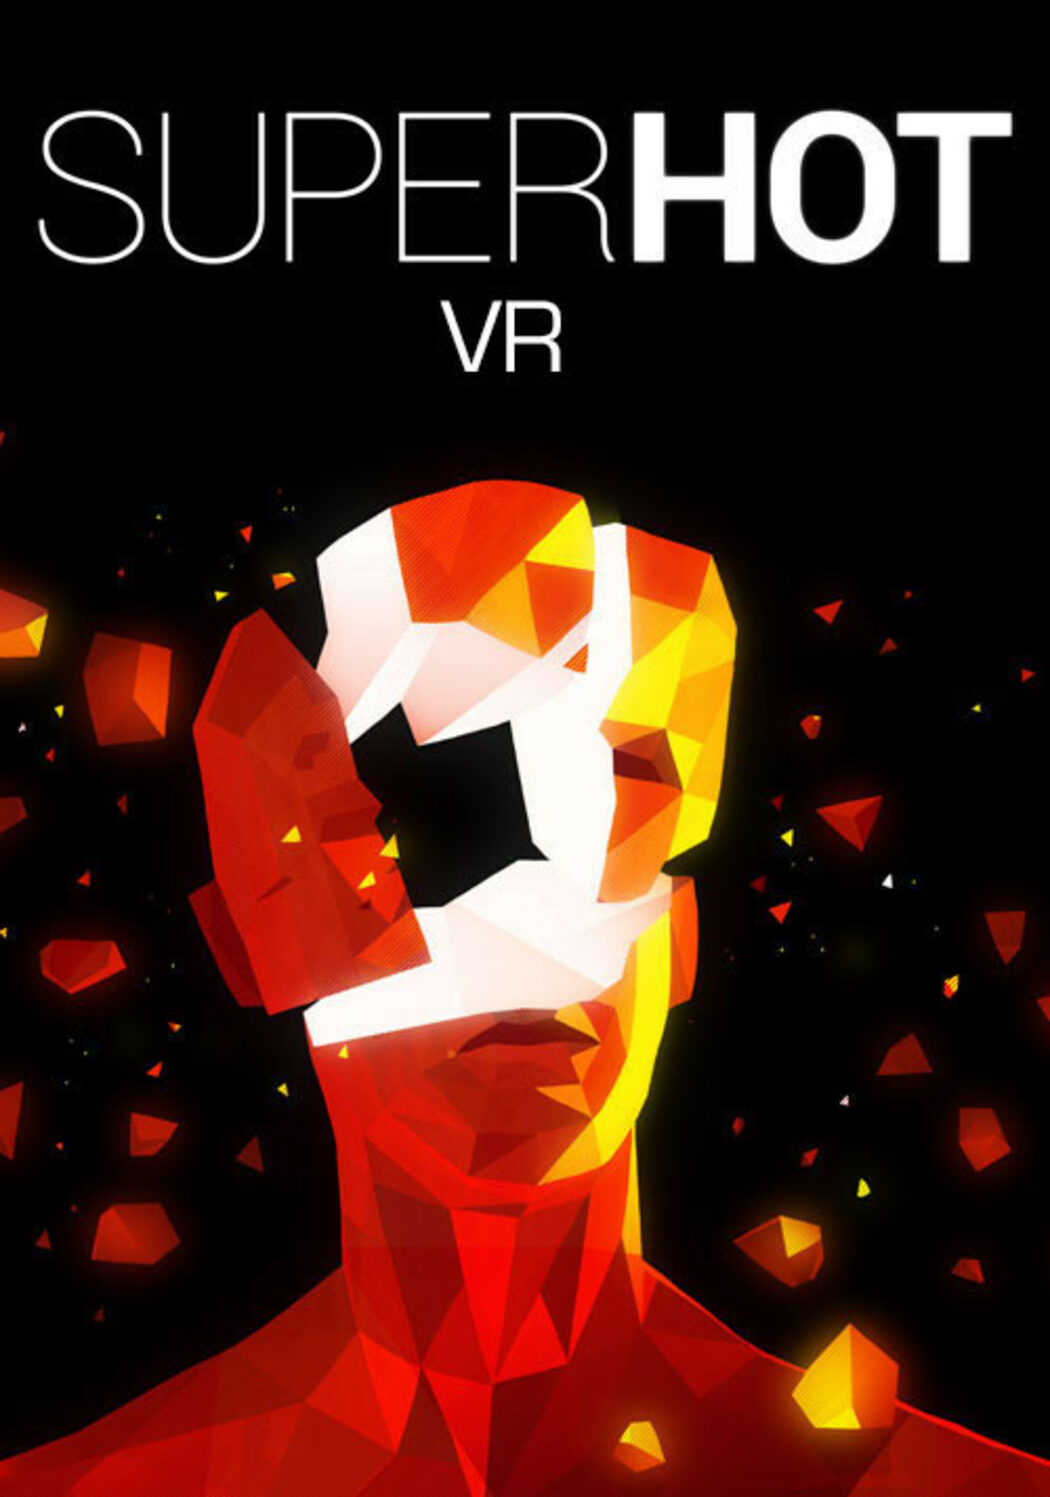 SUPERHOT VR (PS4) - New Level